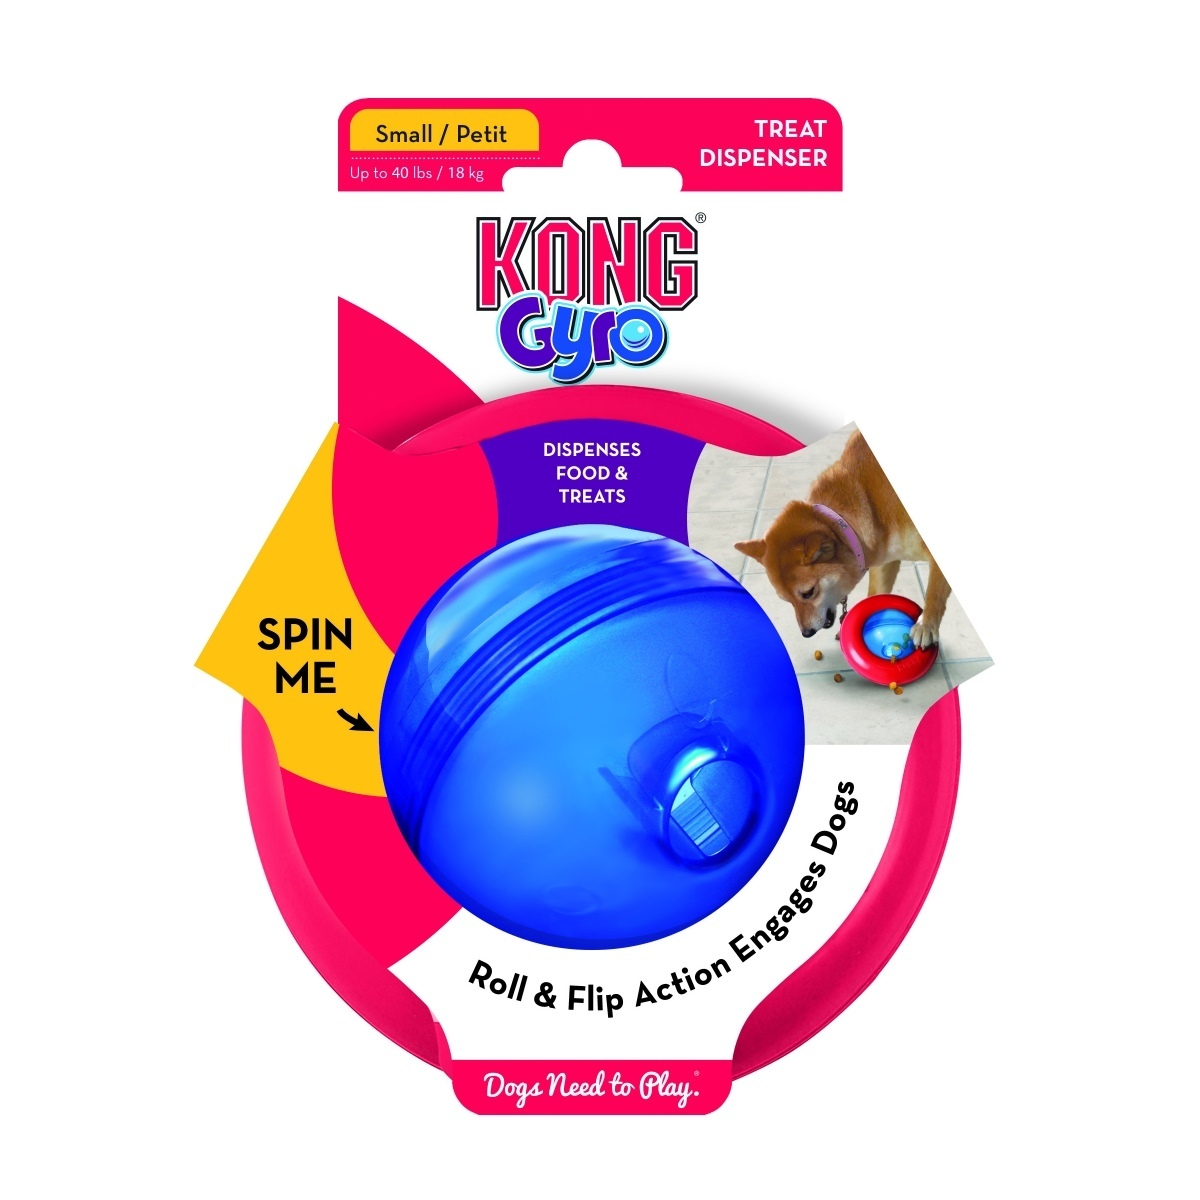 KONG Gyro Treat Dispensing Wobbler Dog Toy - Large  x Pack of 4 Unit/s image 1